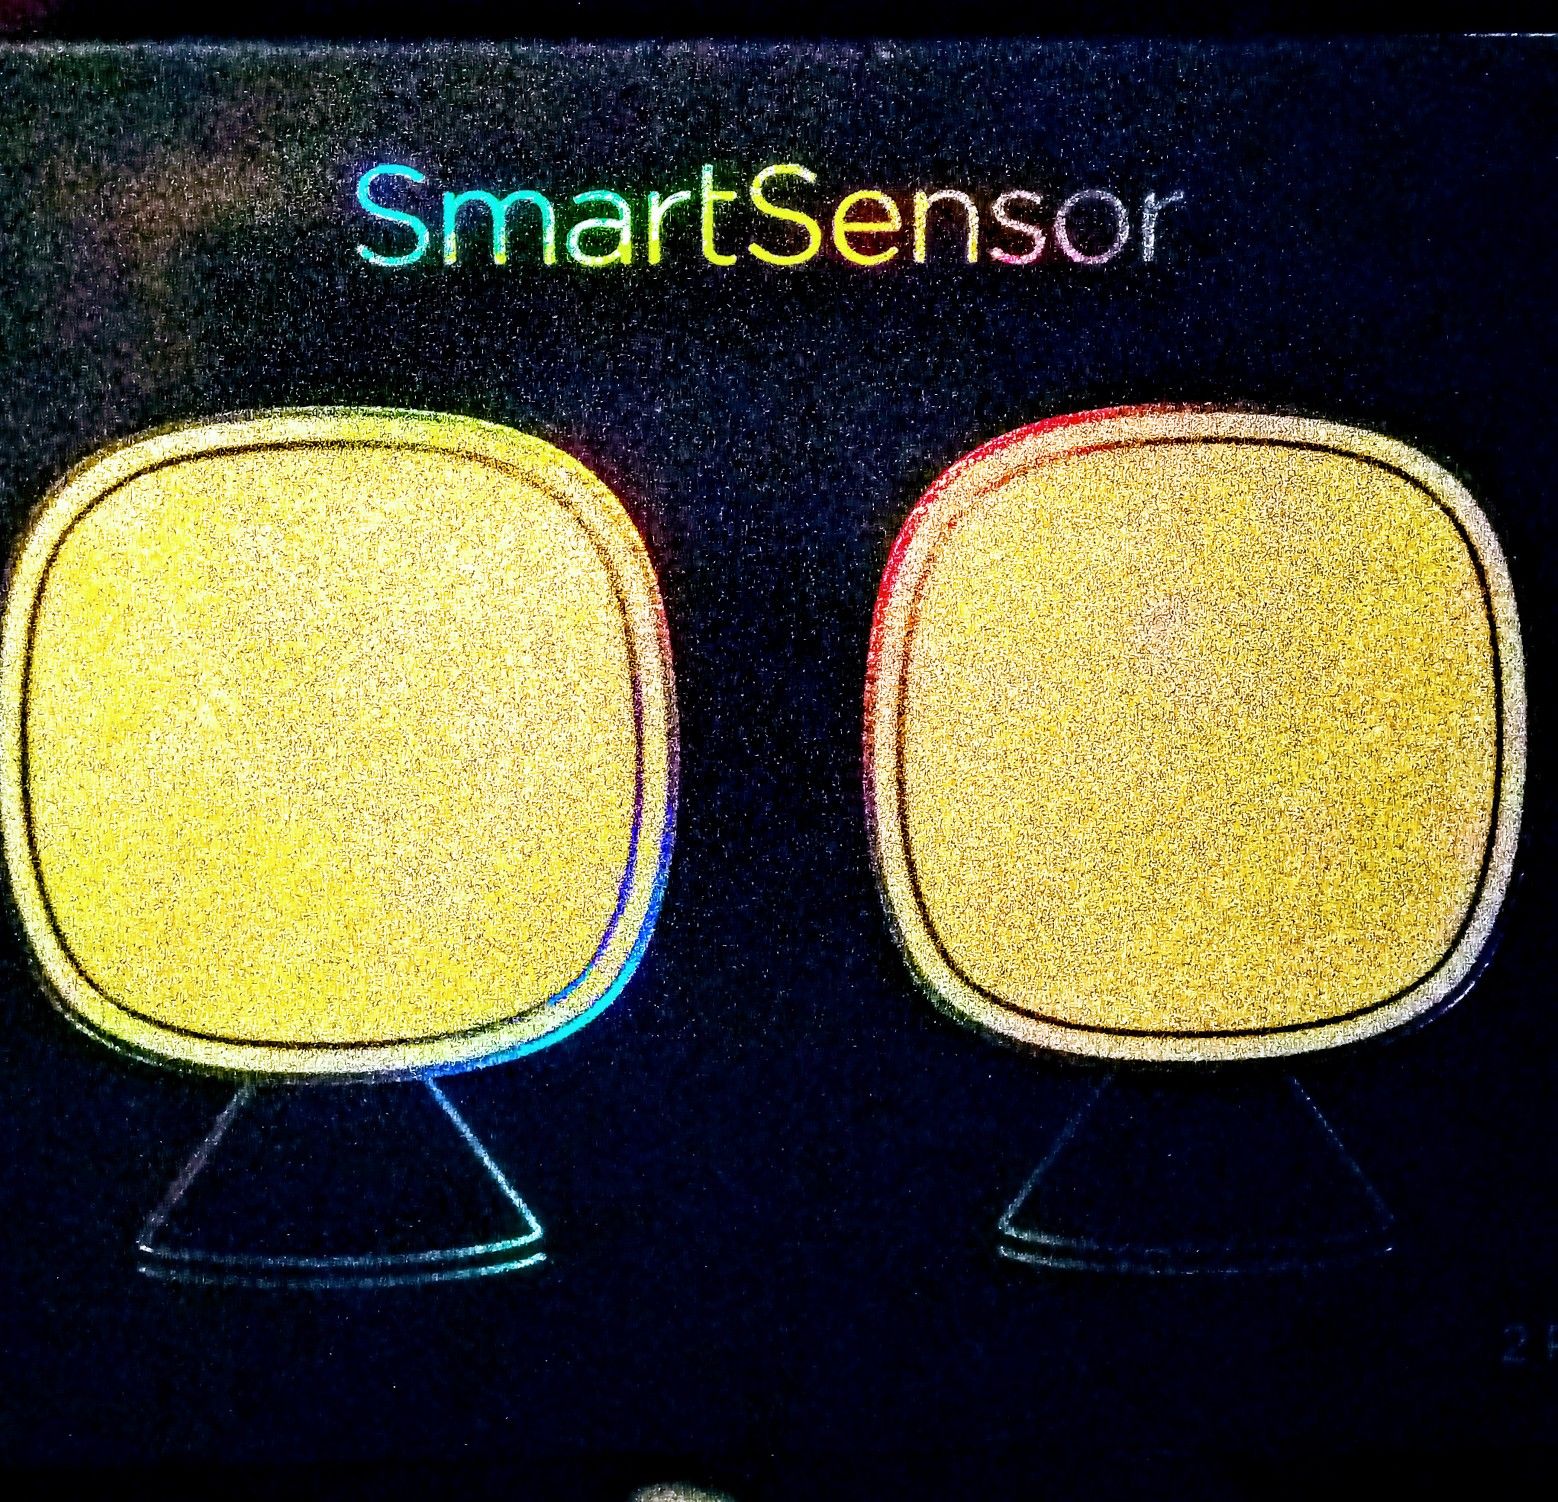 Ecobee Thermostat Smart Sensor -2 pack (4 packs total)